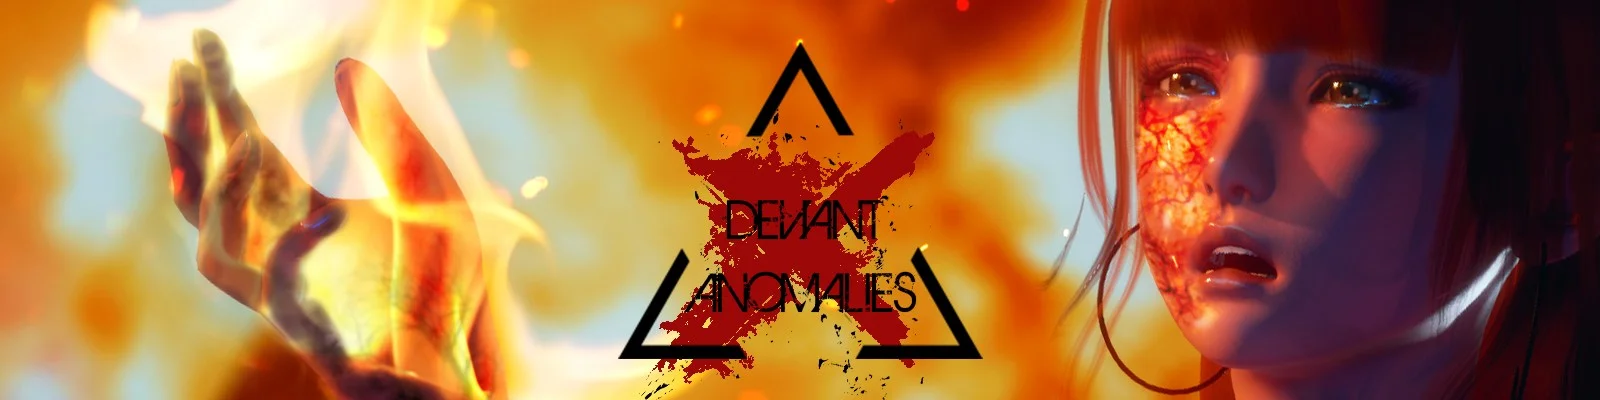 Deviant Anomalies [MoolahMilk] Adult xxx Game Download